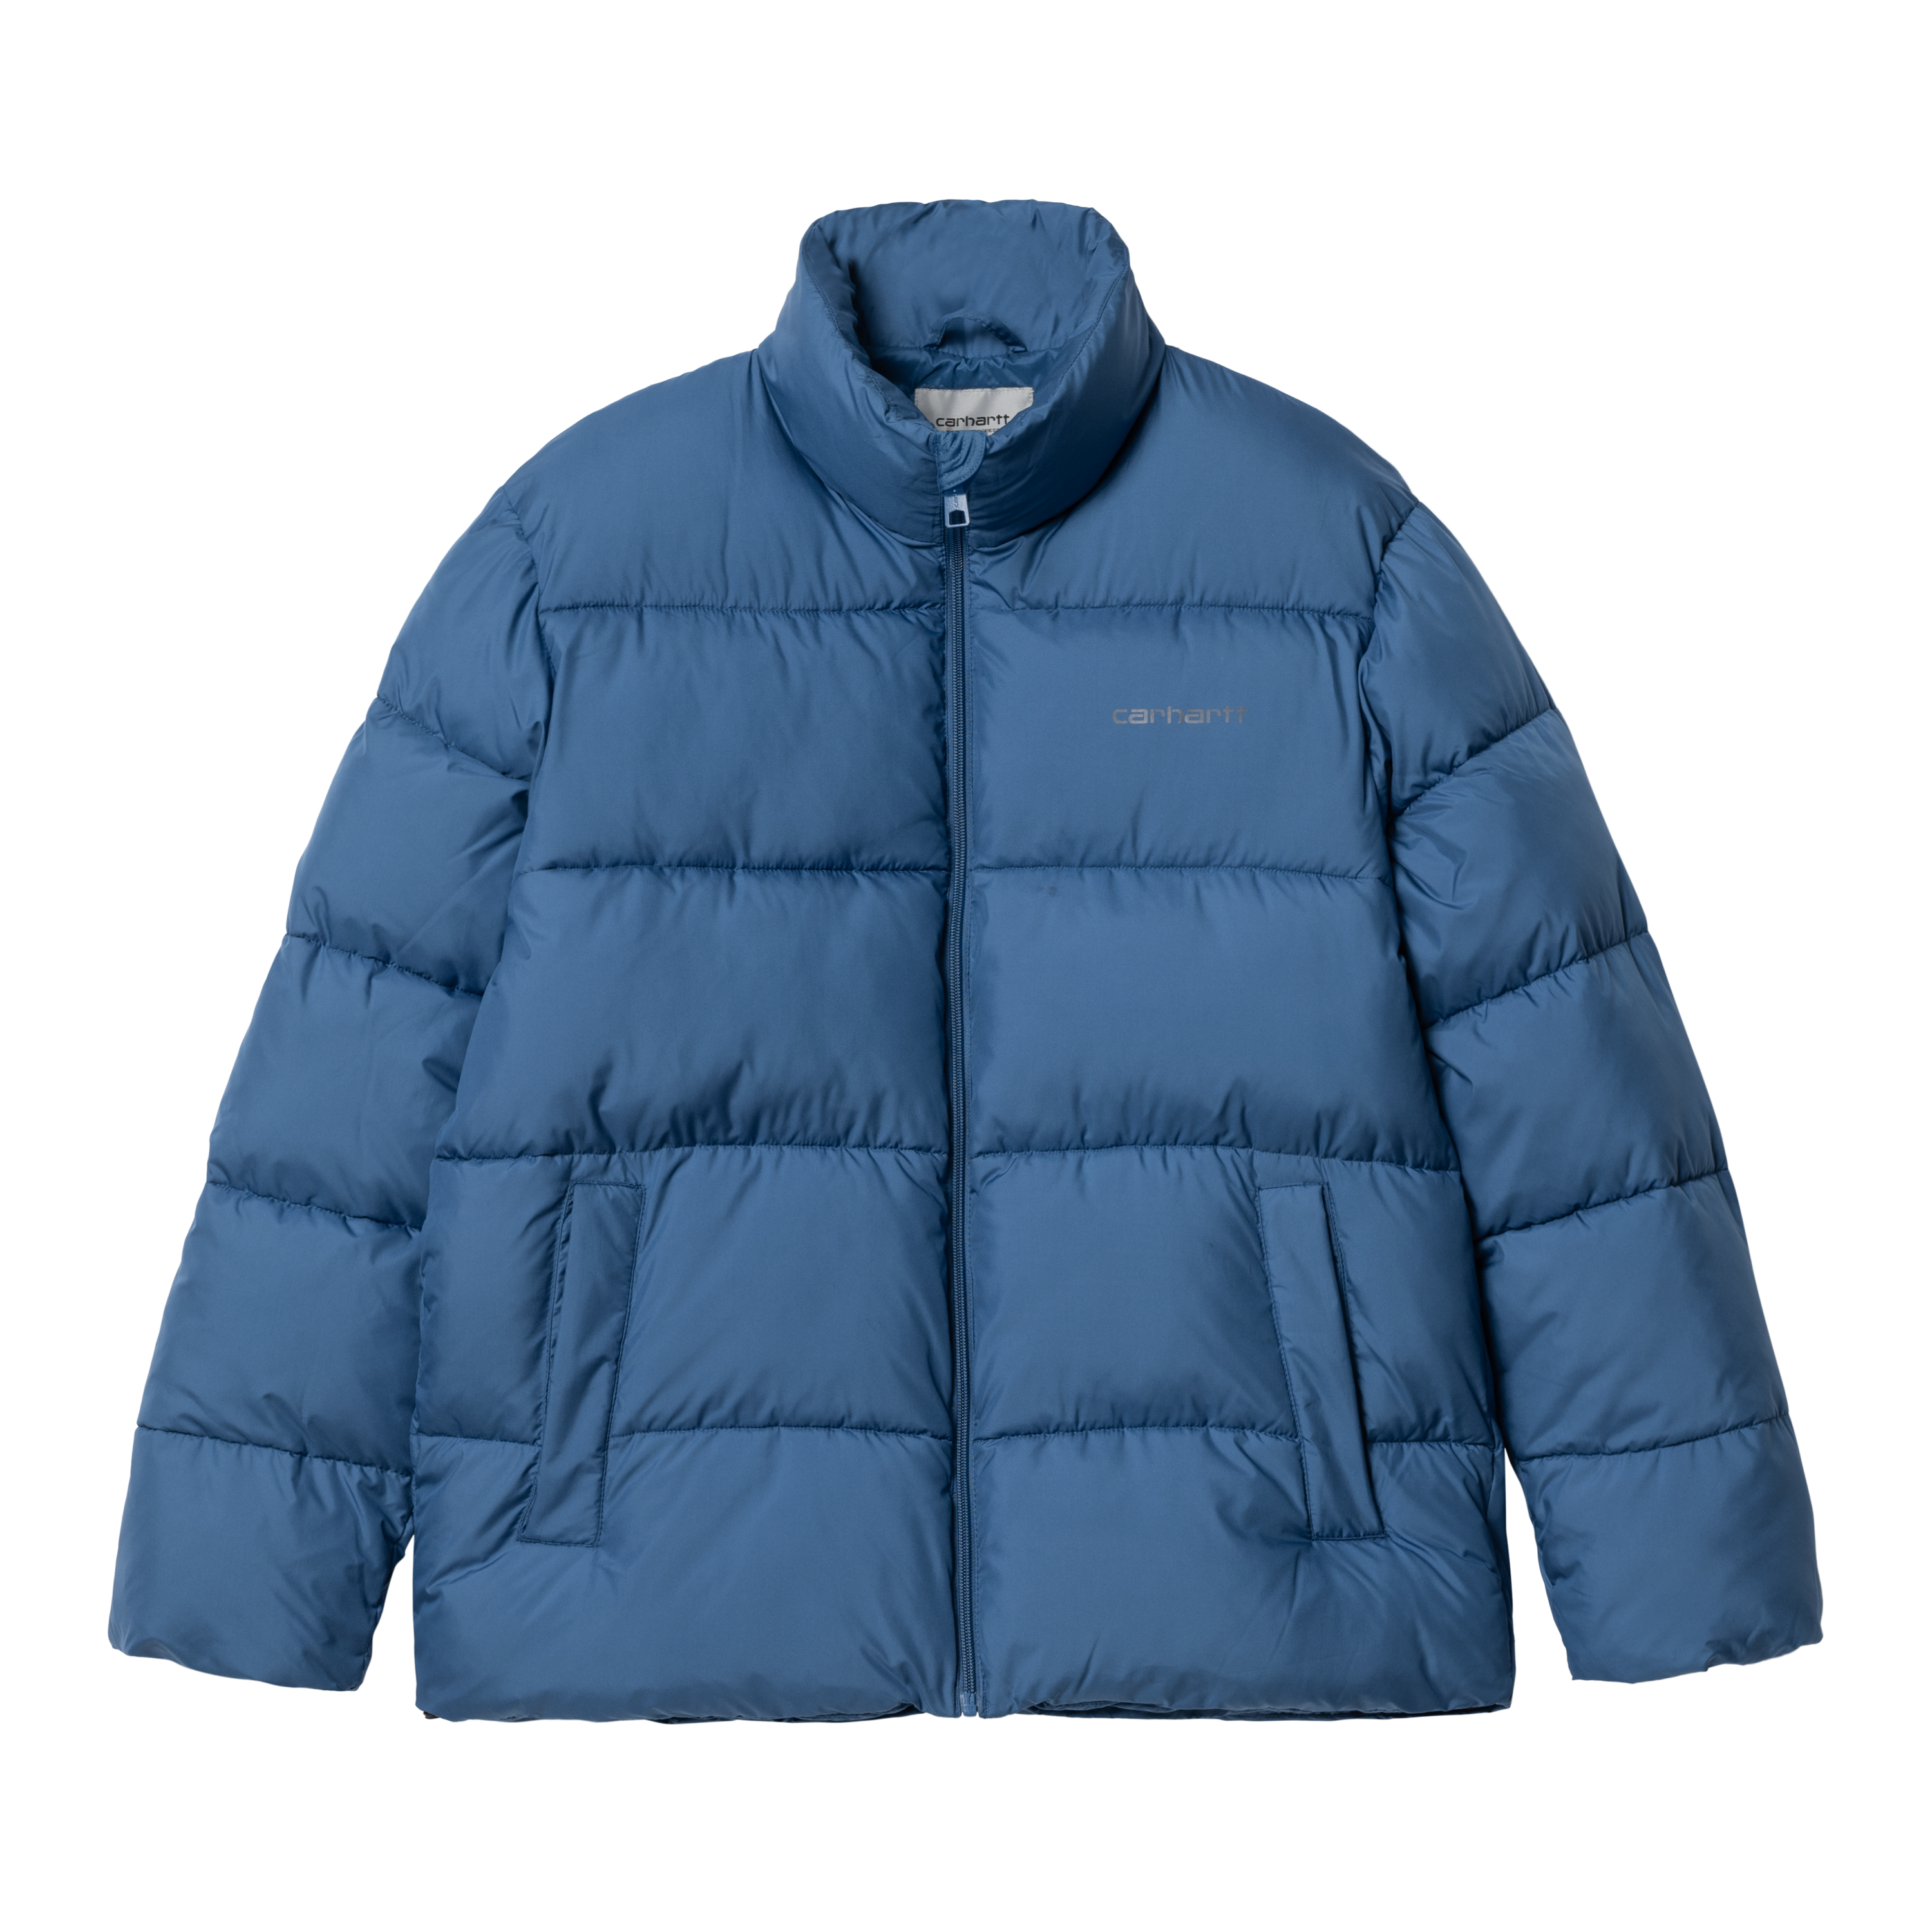 Carhartt WIP Springfield Jacket in Blu